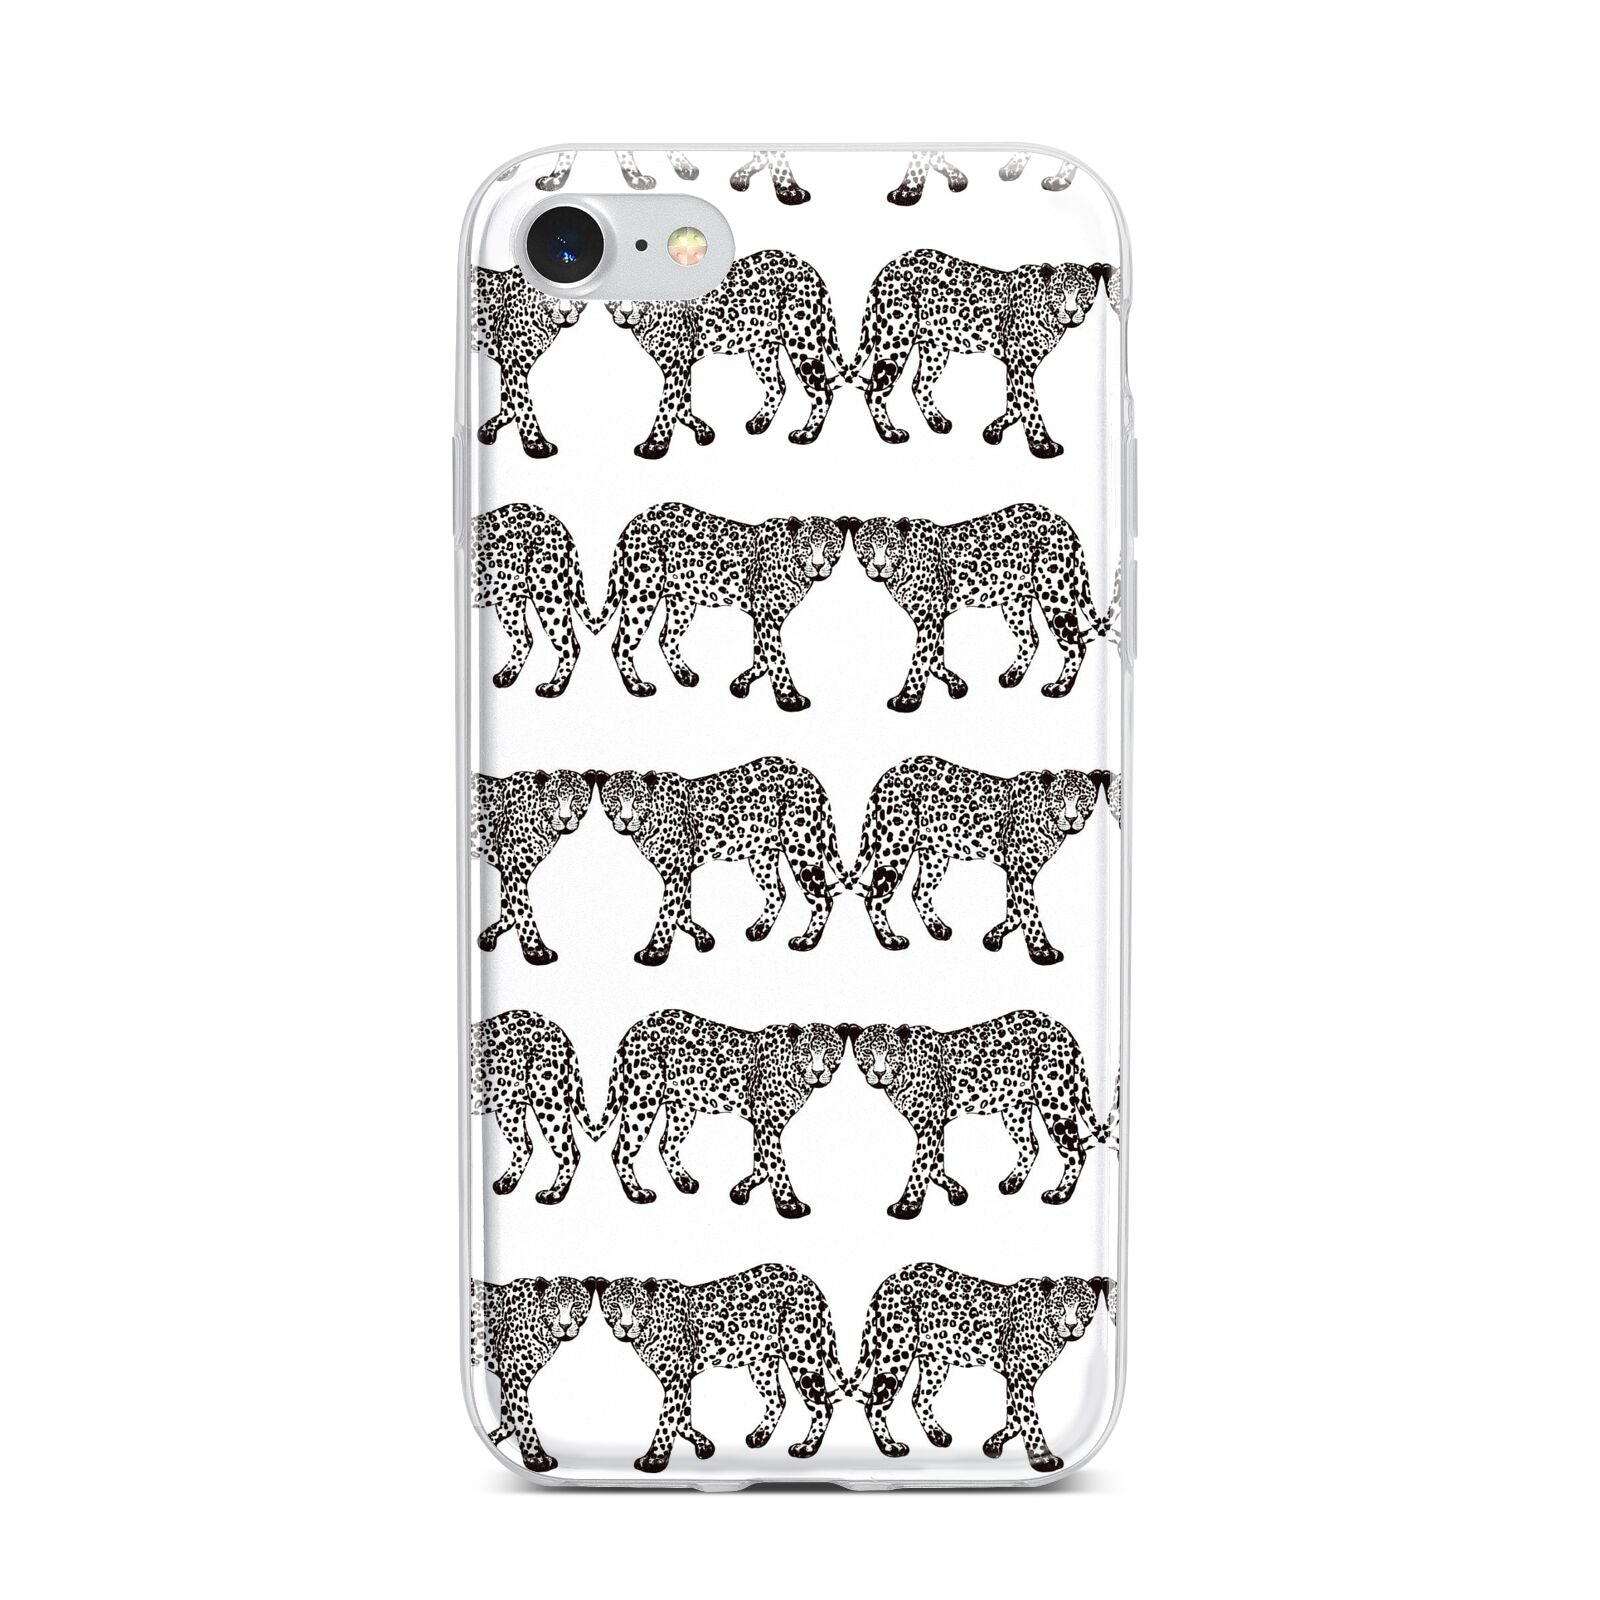 Monochrome Mirrored Leopard Print iPhone 7 Bumper Case on Silver iPhone